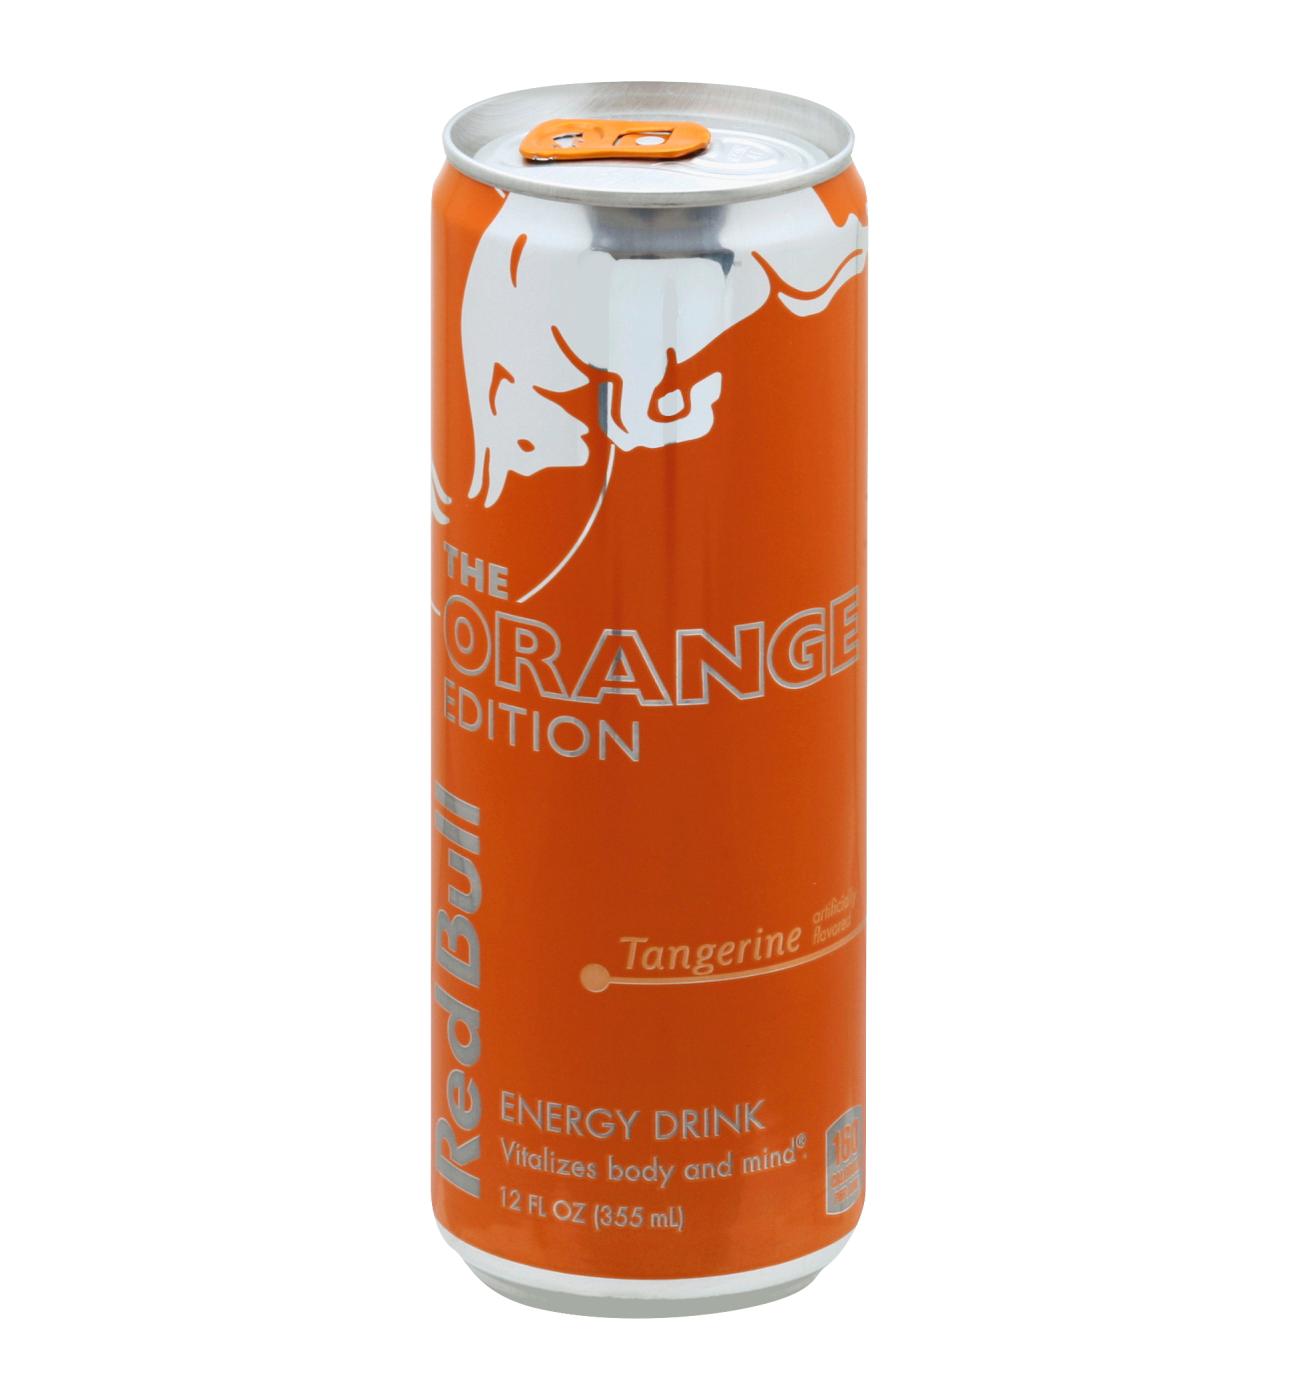 Red Bull The Orange Edition Tangerine Energy Drink; image 1 of 2